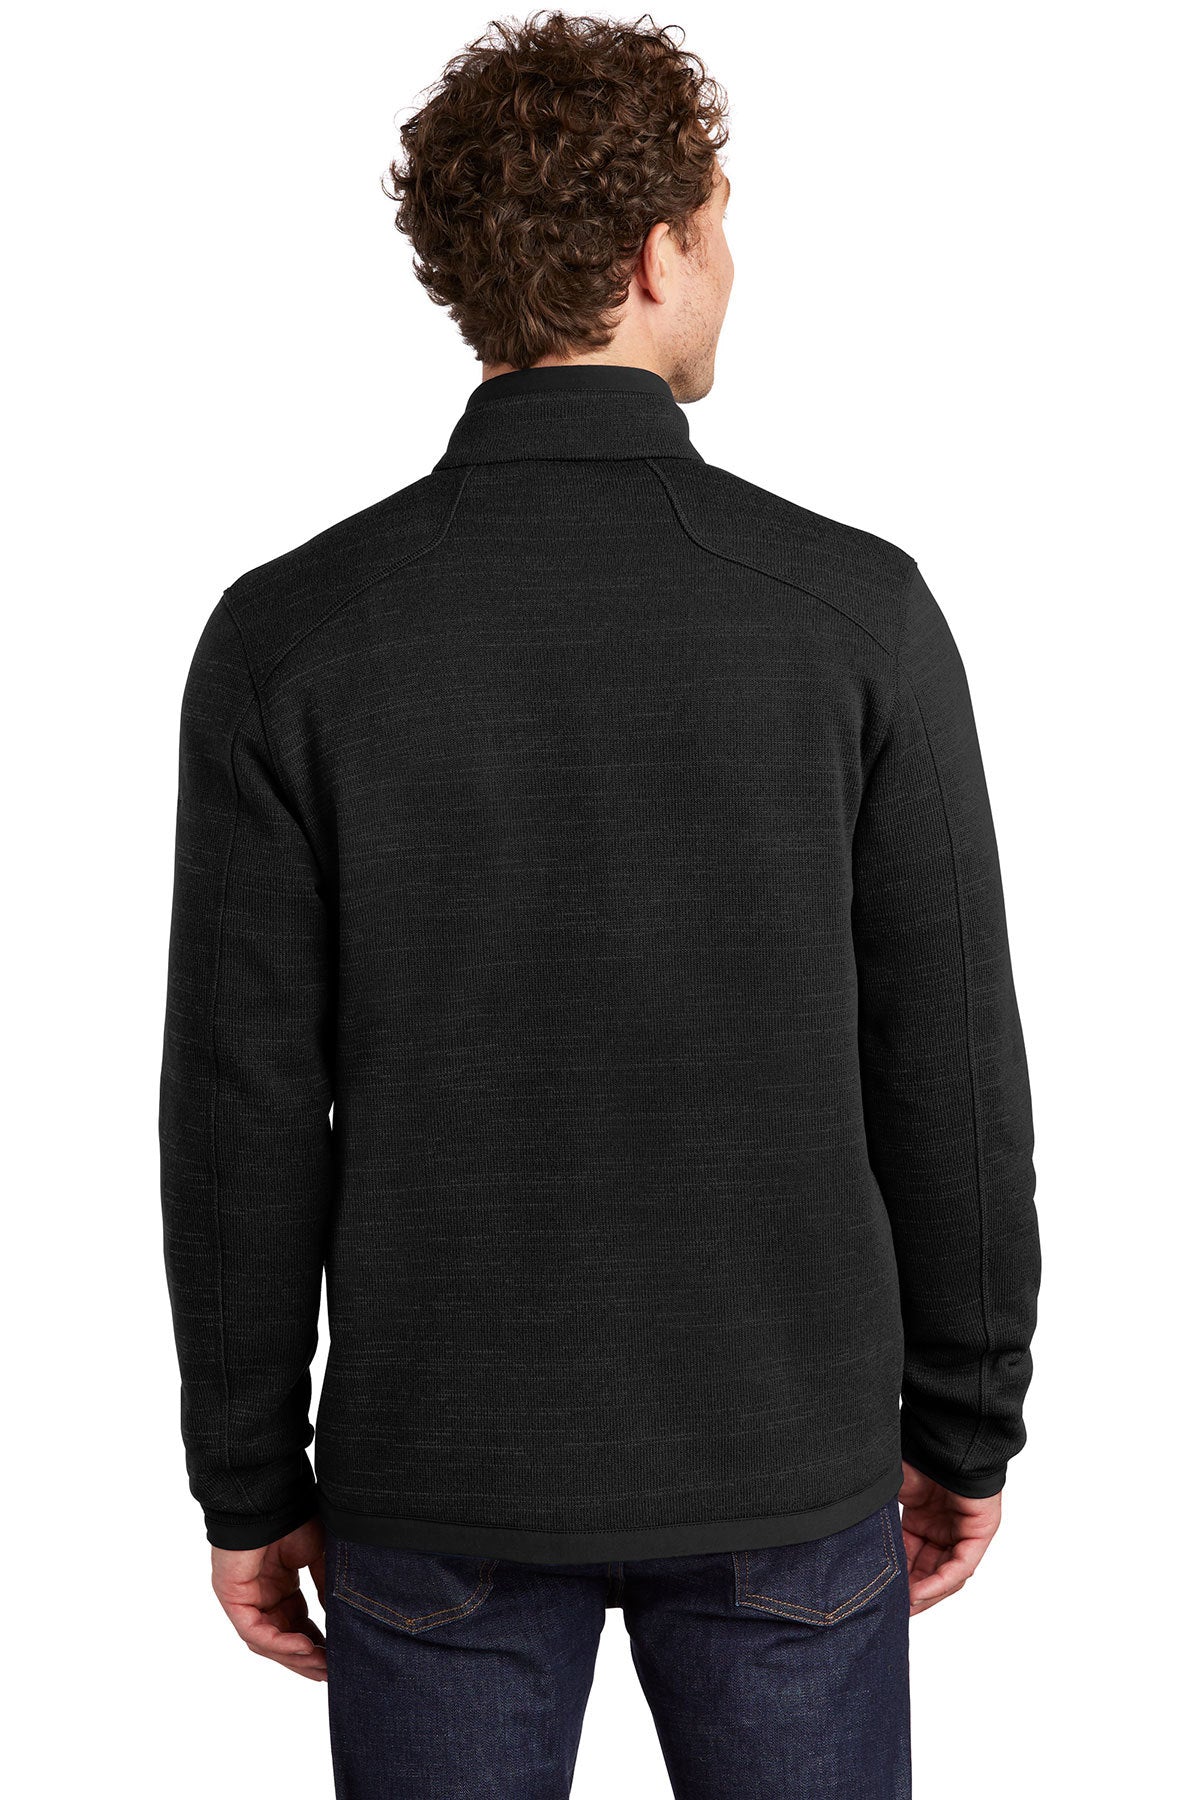 Eddie Bauer Custom Fleece Jackets, Black